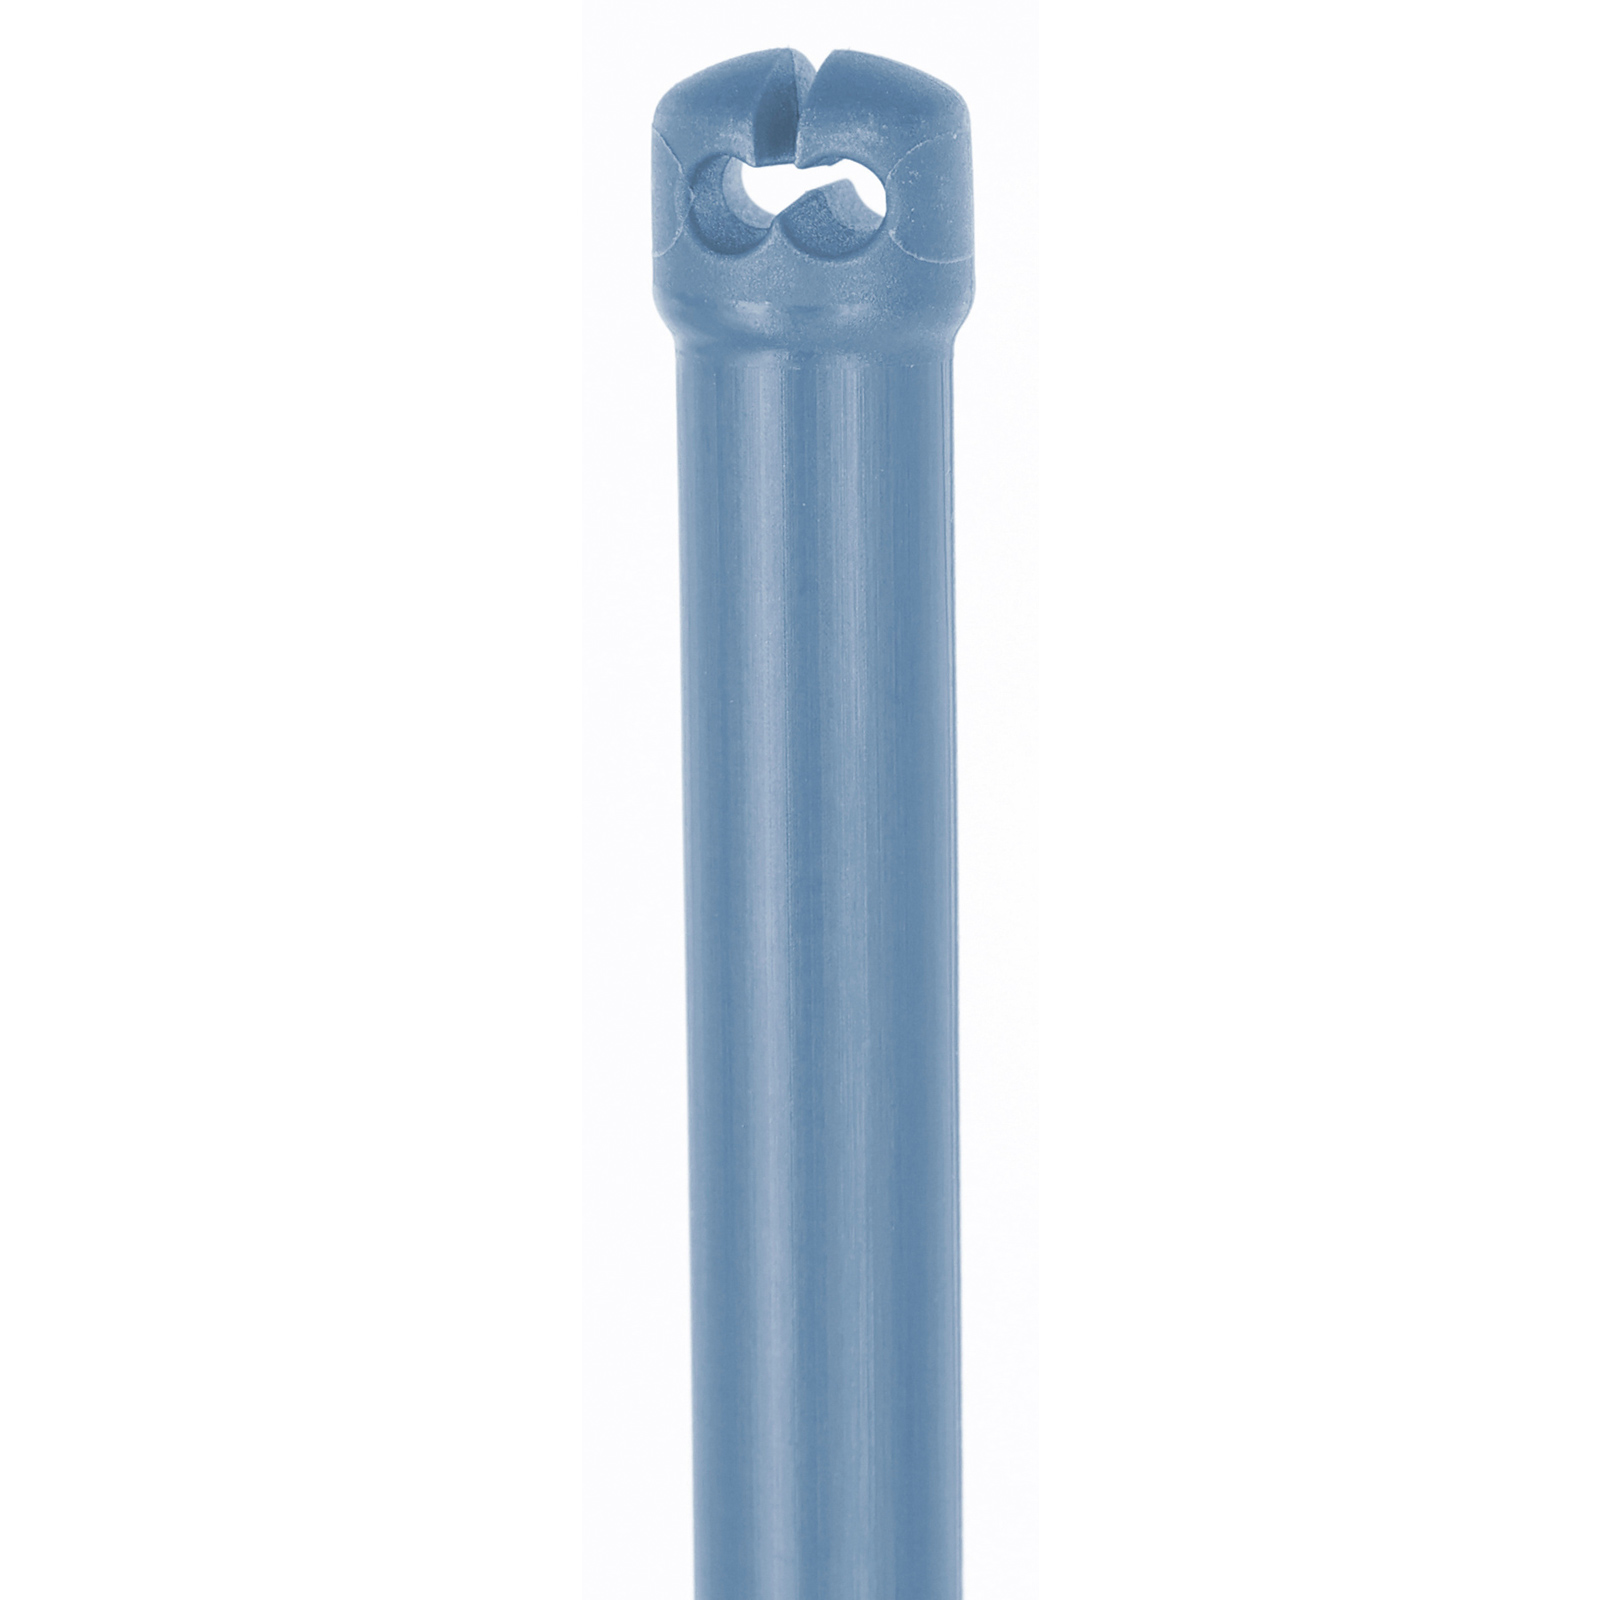 Premium Thermoplastic Fibreglass post for pasture net, double tip, blue 90 cm